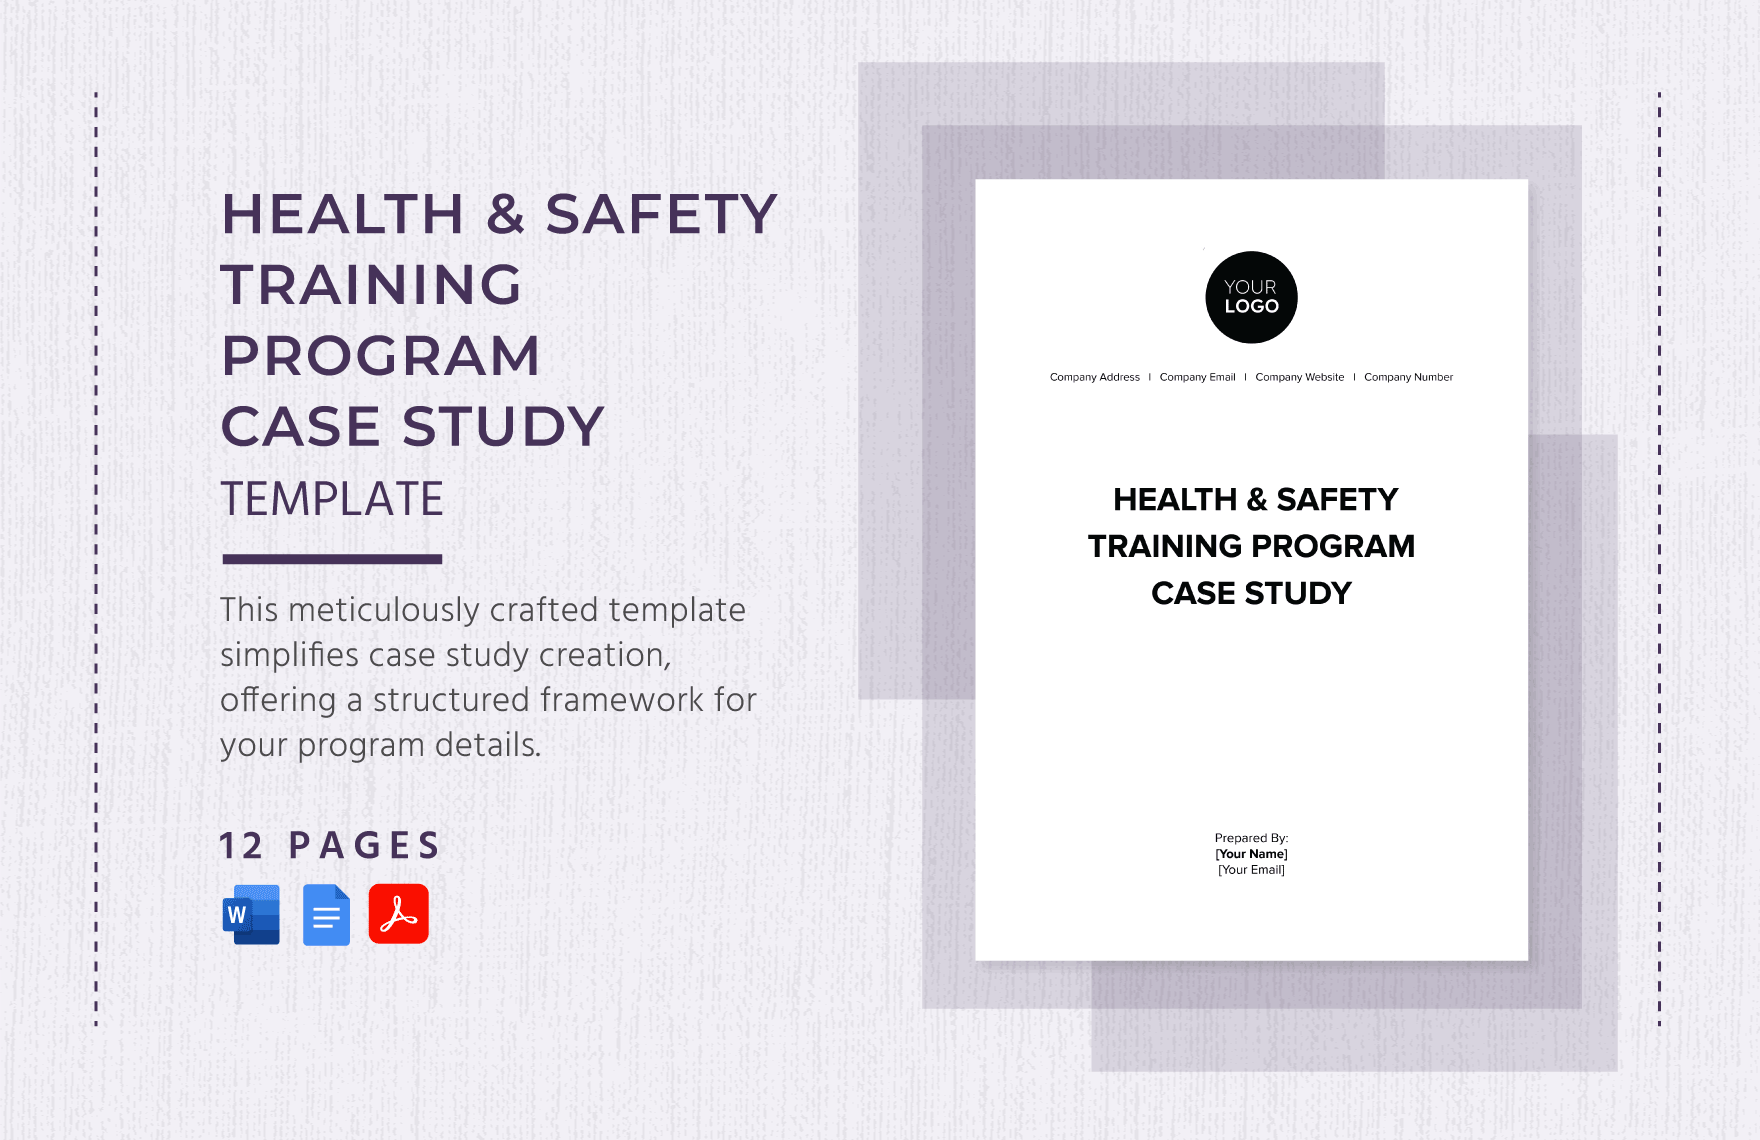 Health & Safety Training Program Case Study Template